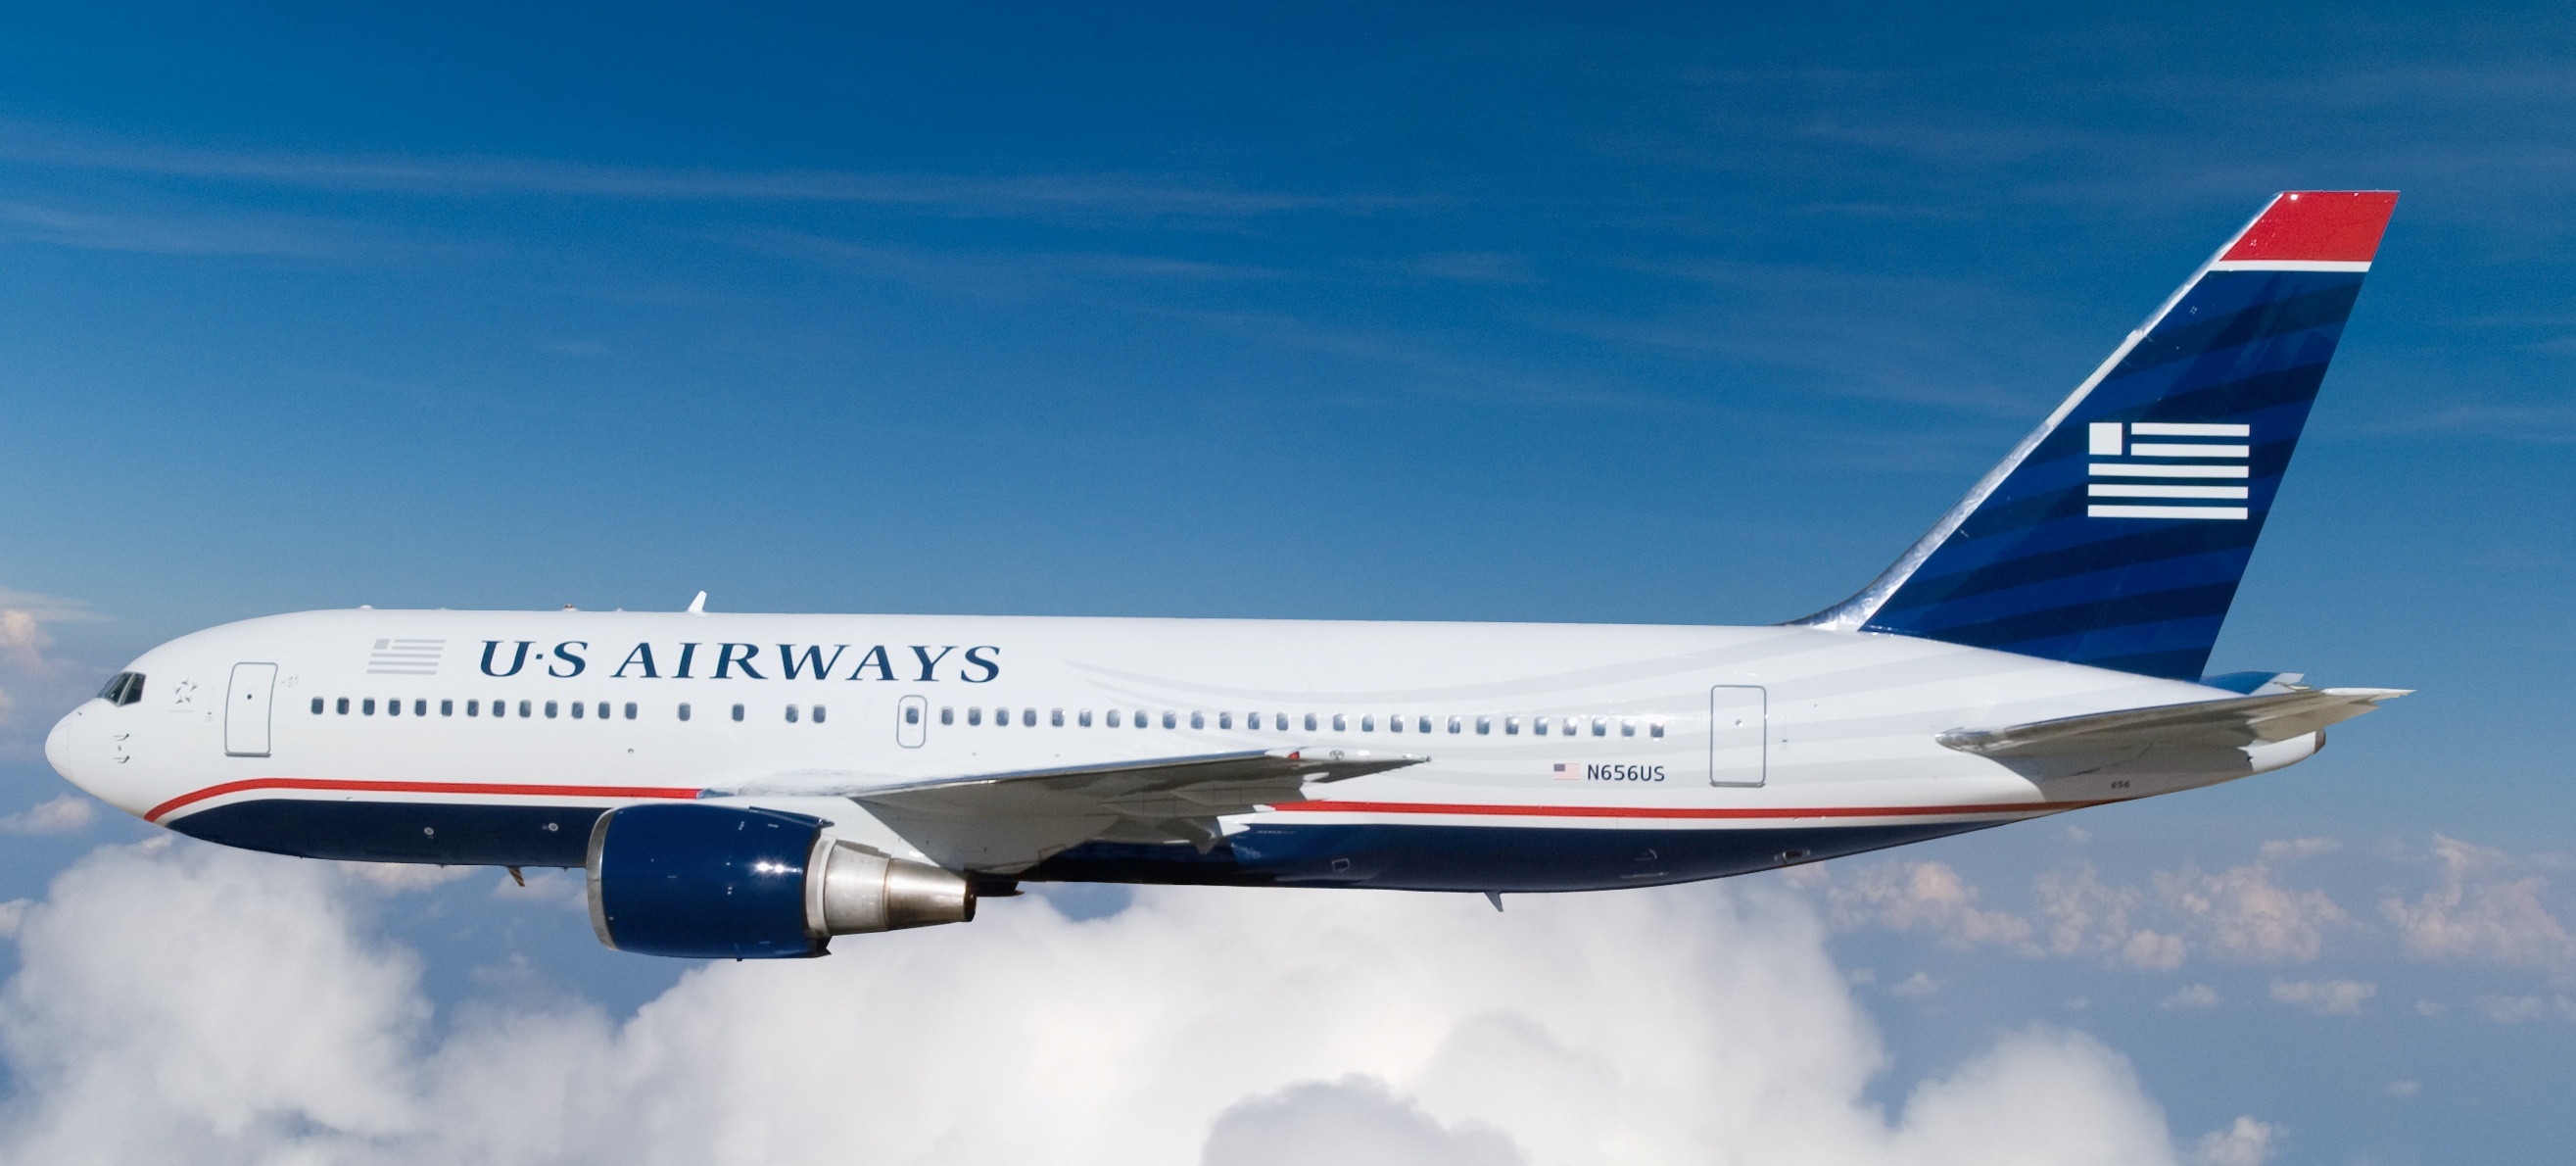 US Airways, Boeing 767 200, Fleet departure, End of an era, 2630x1190 Dual Screen Desktop